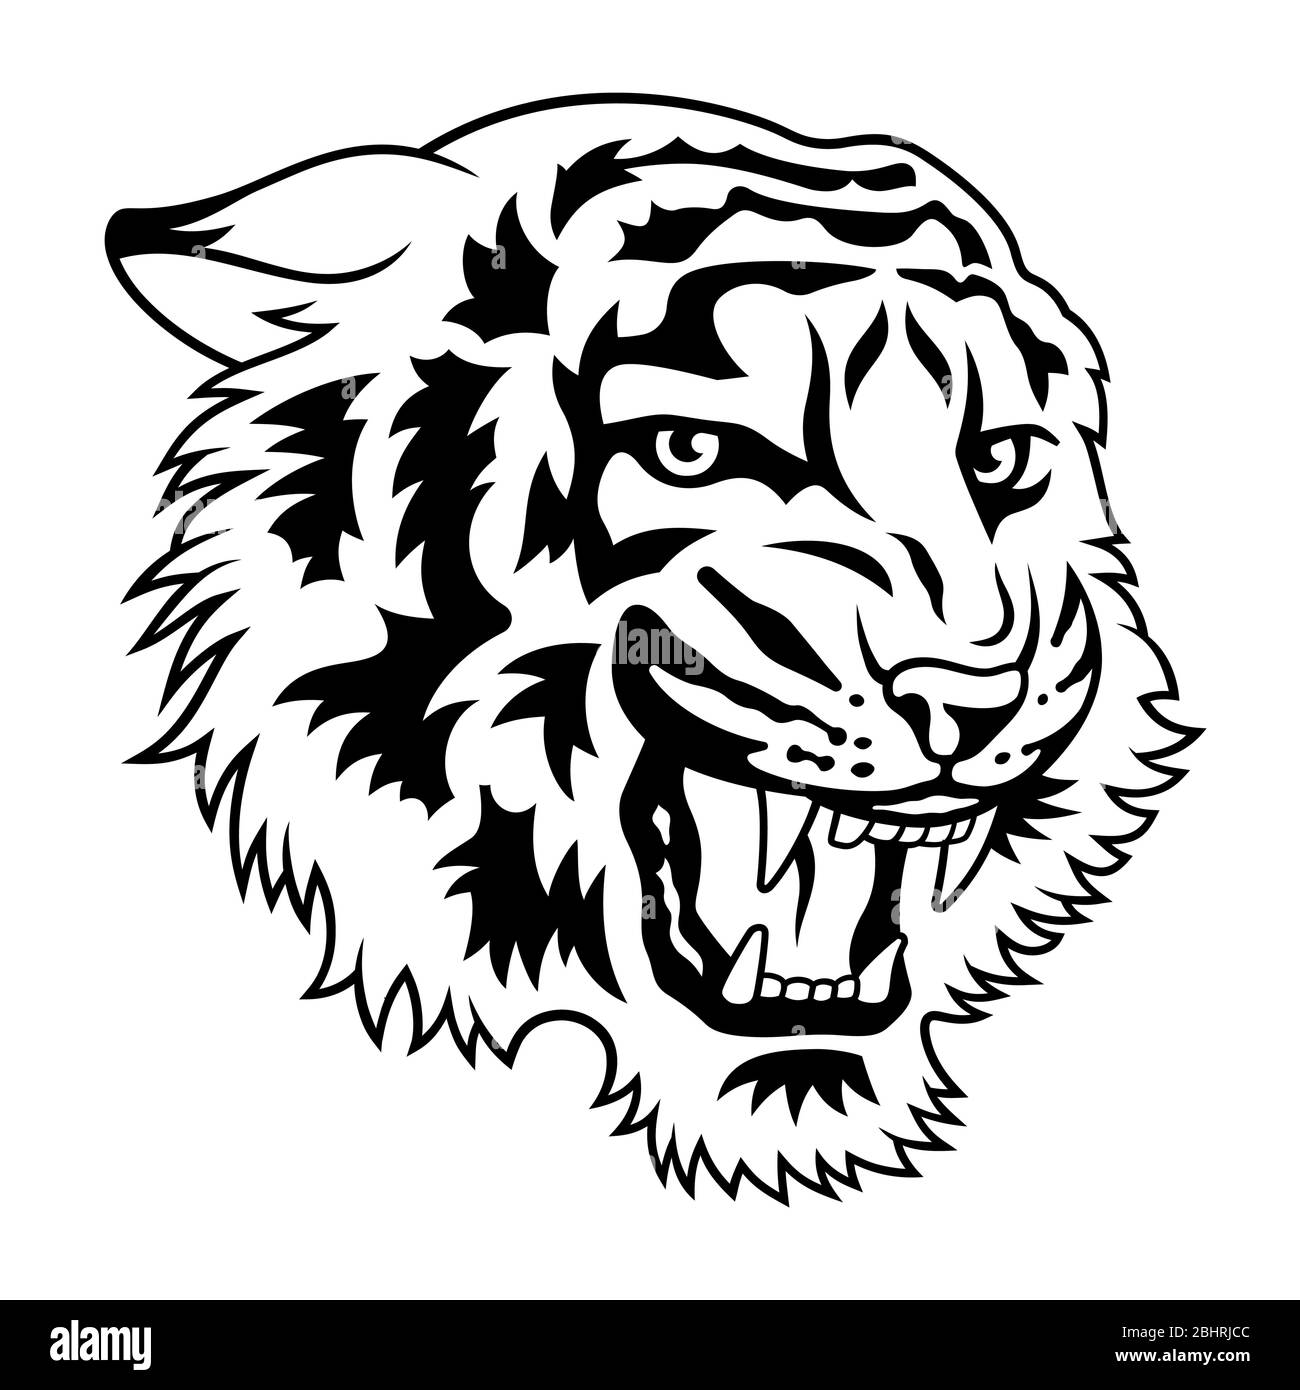 Tiger head vector illustration for t-shirt design Stock Vector